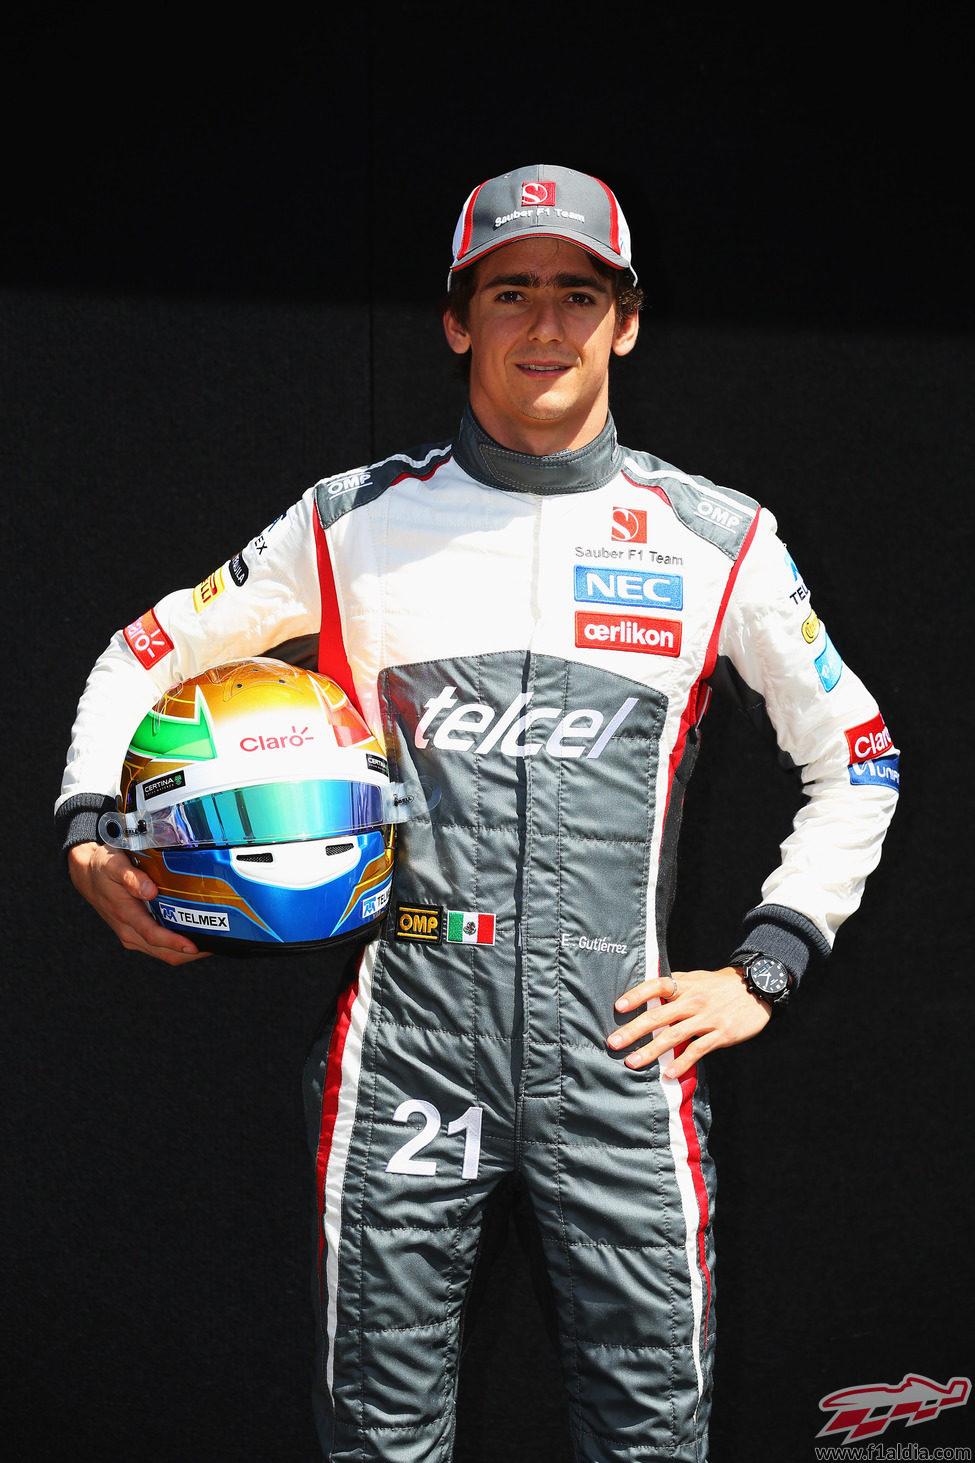 Esteban Gutiérrez, piloto de Sauber en 2014